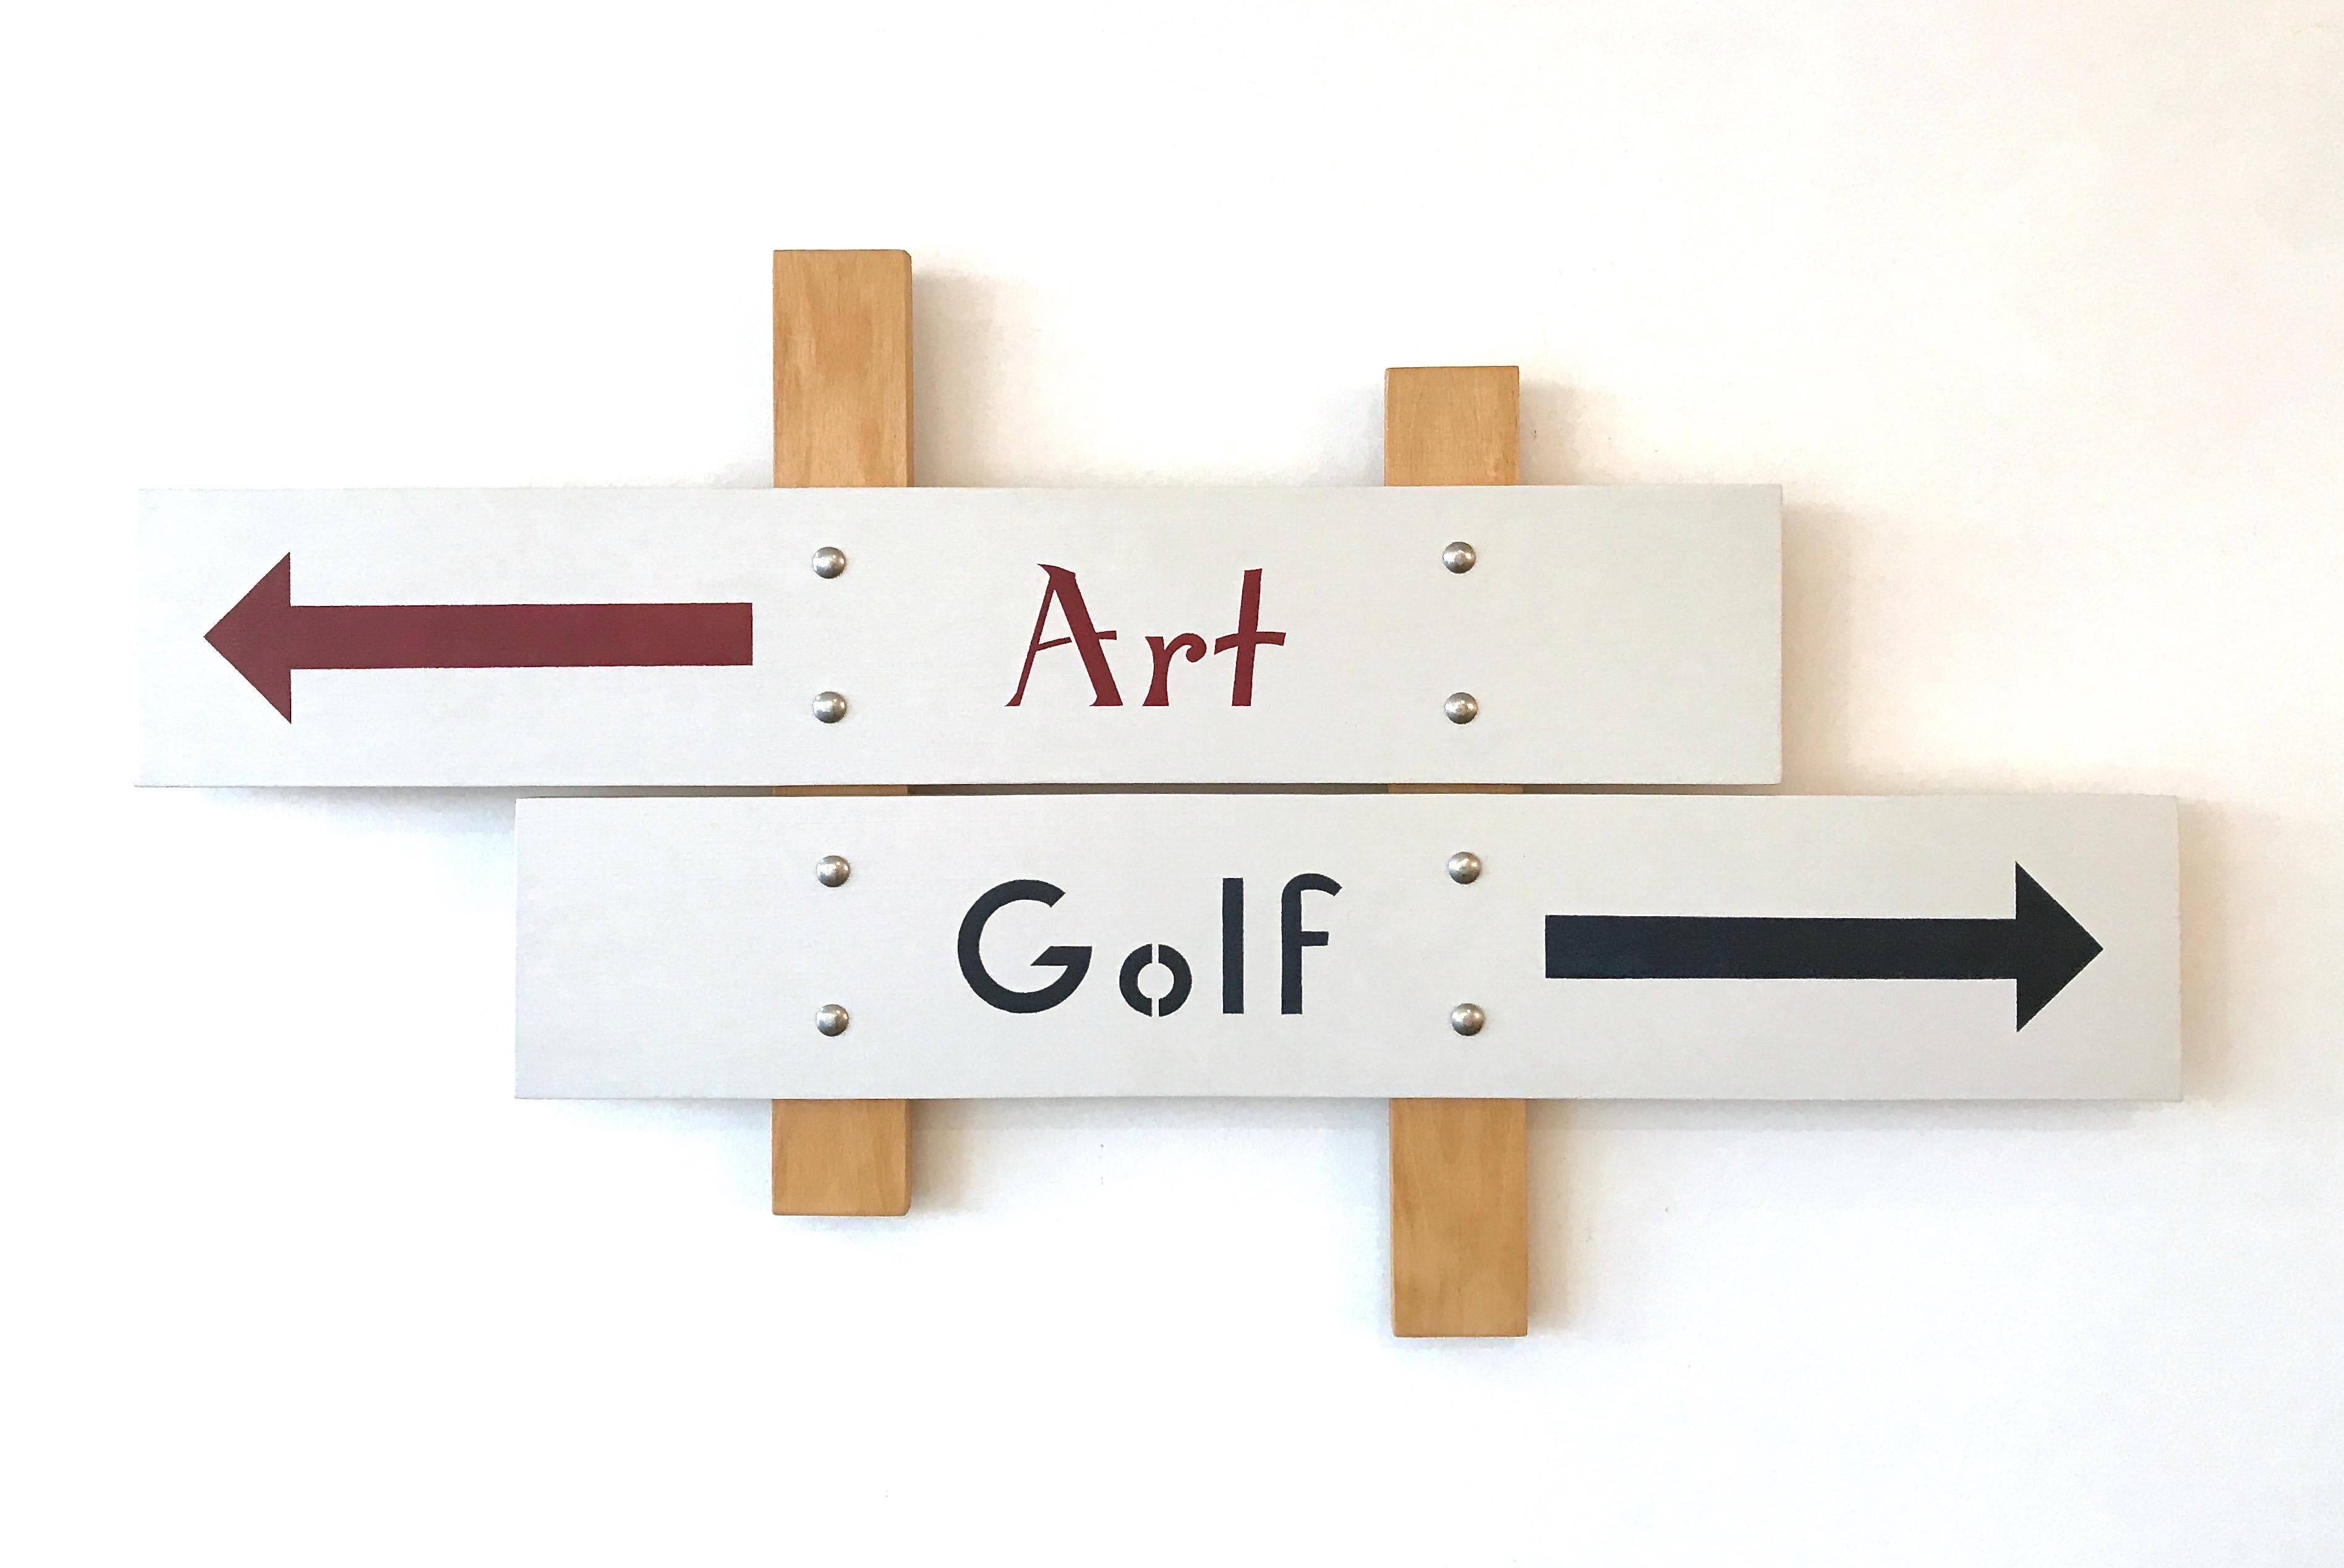 ""Art/Golf""   Pop-Art Americana, humoristique. Construction rouge/noir/blanc, Sports